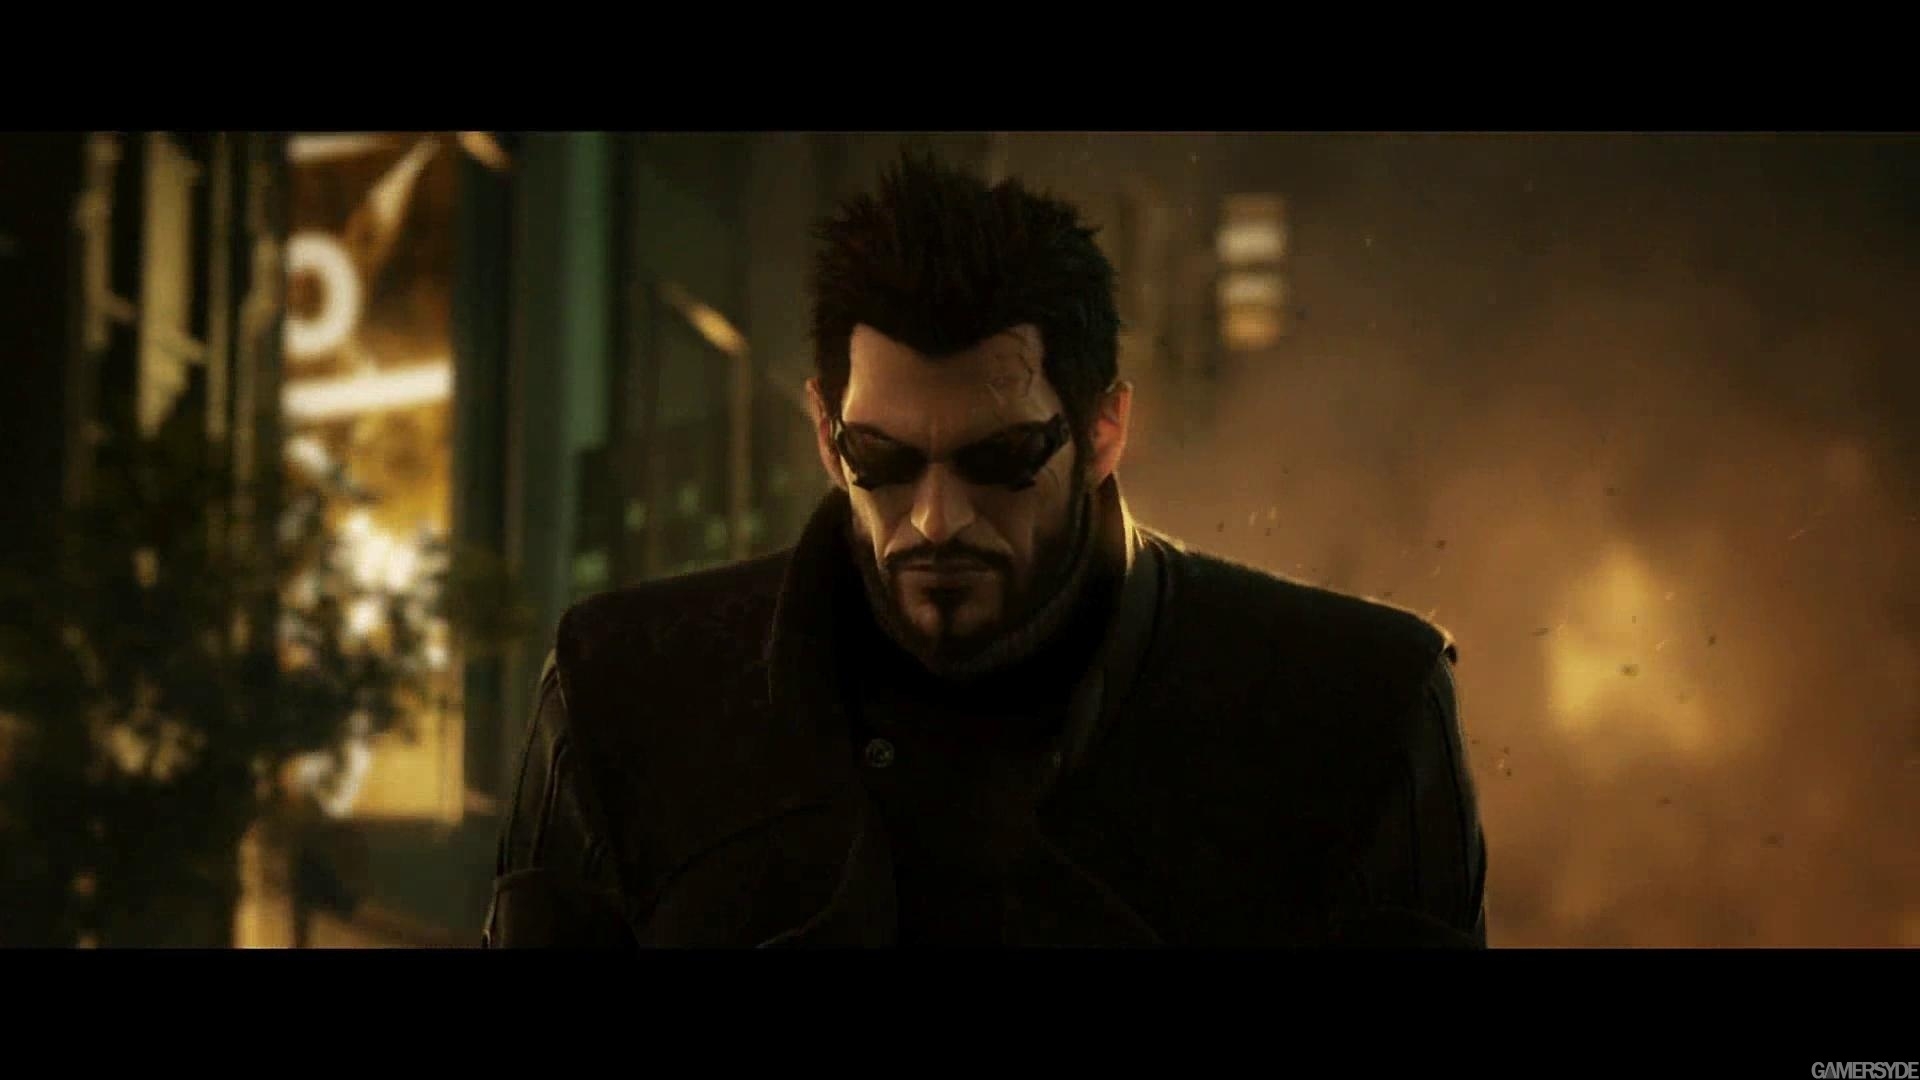 Deus Ex: Human Revolution: main hero wallpapers and images ...